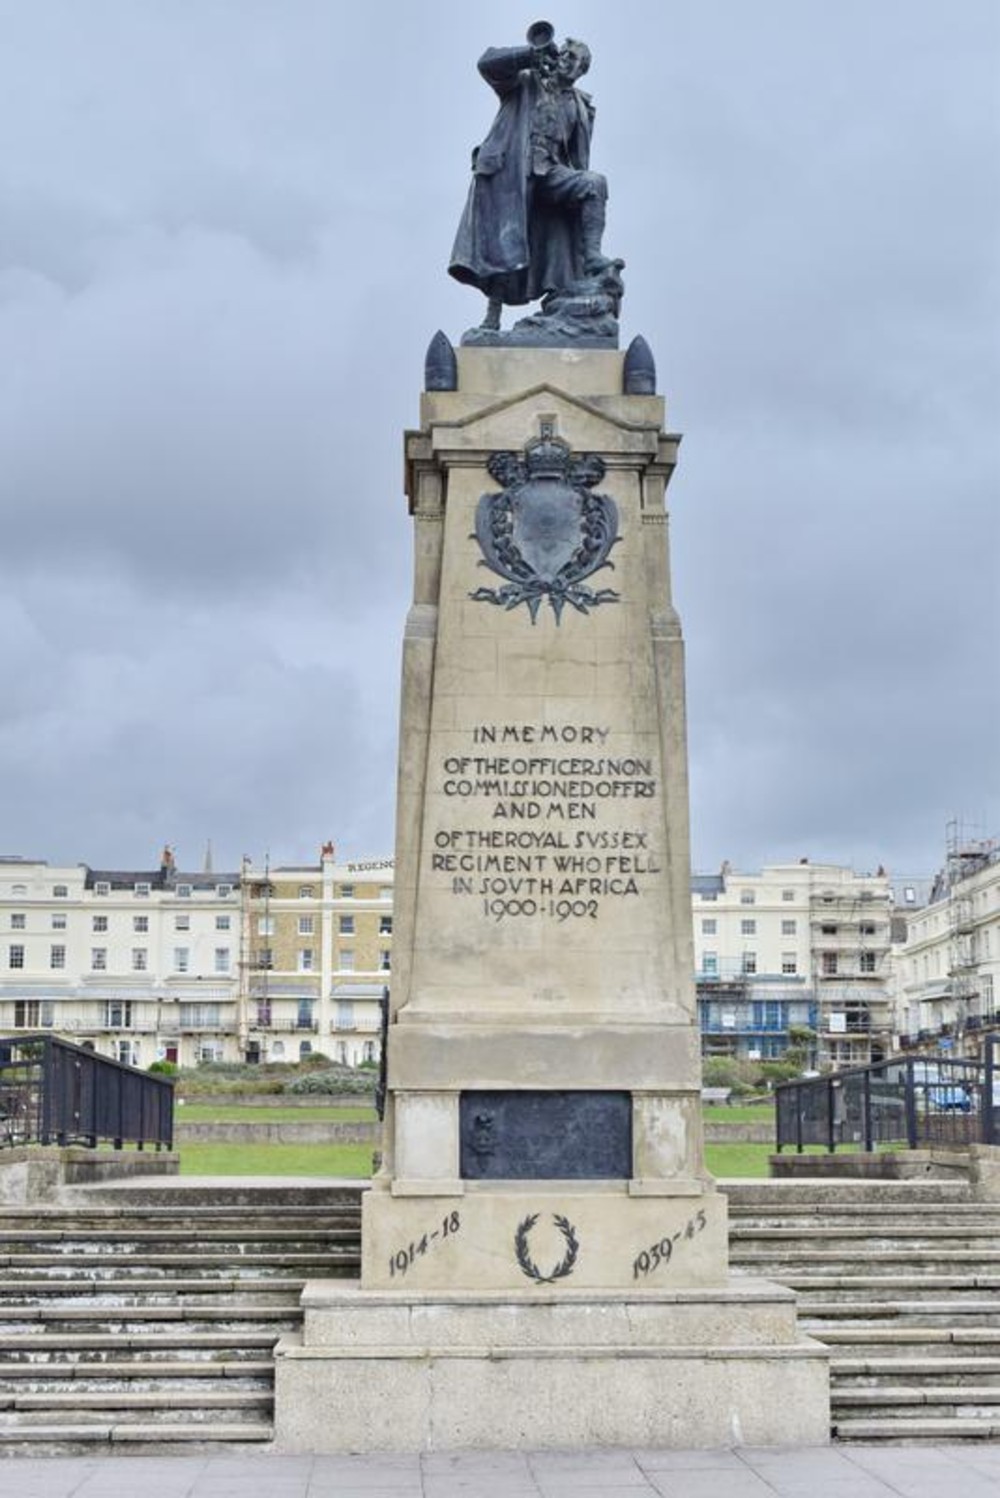 The memorial in Brighton to commemorate the Royal Sussex Regiment 